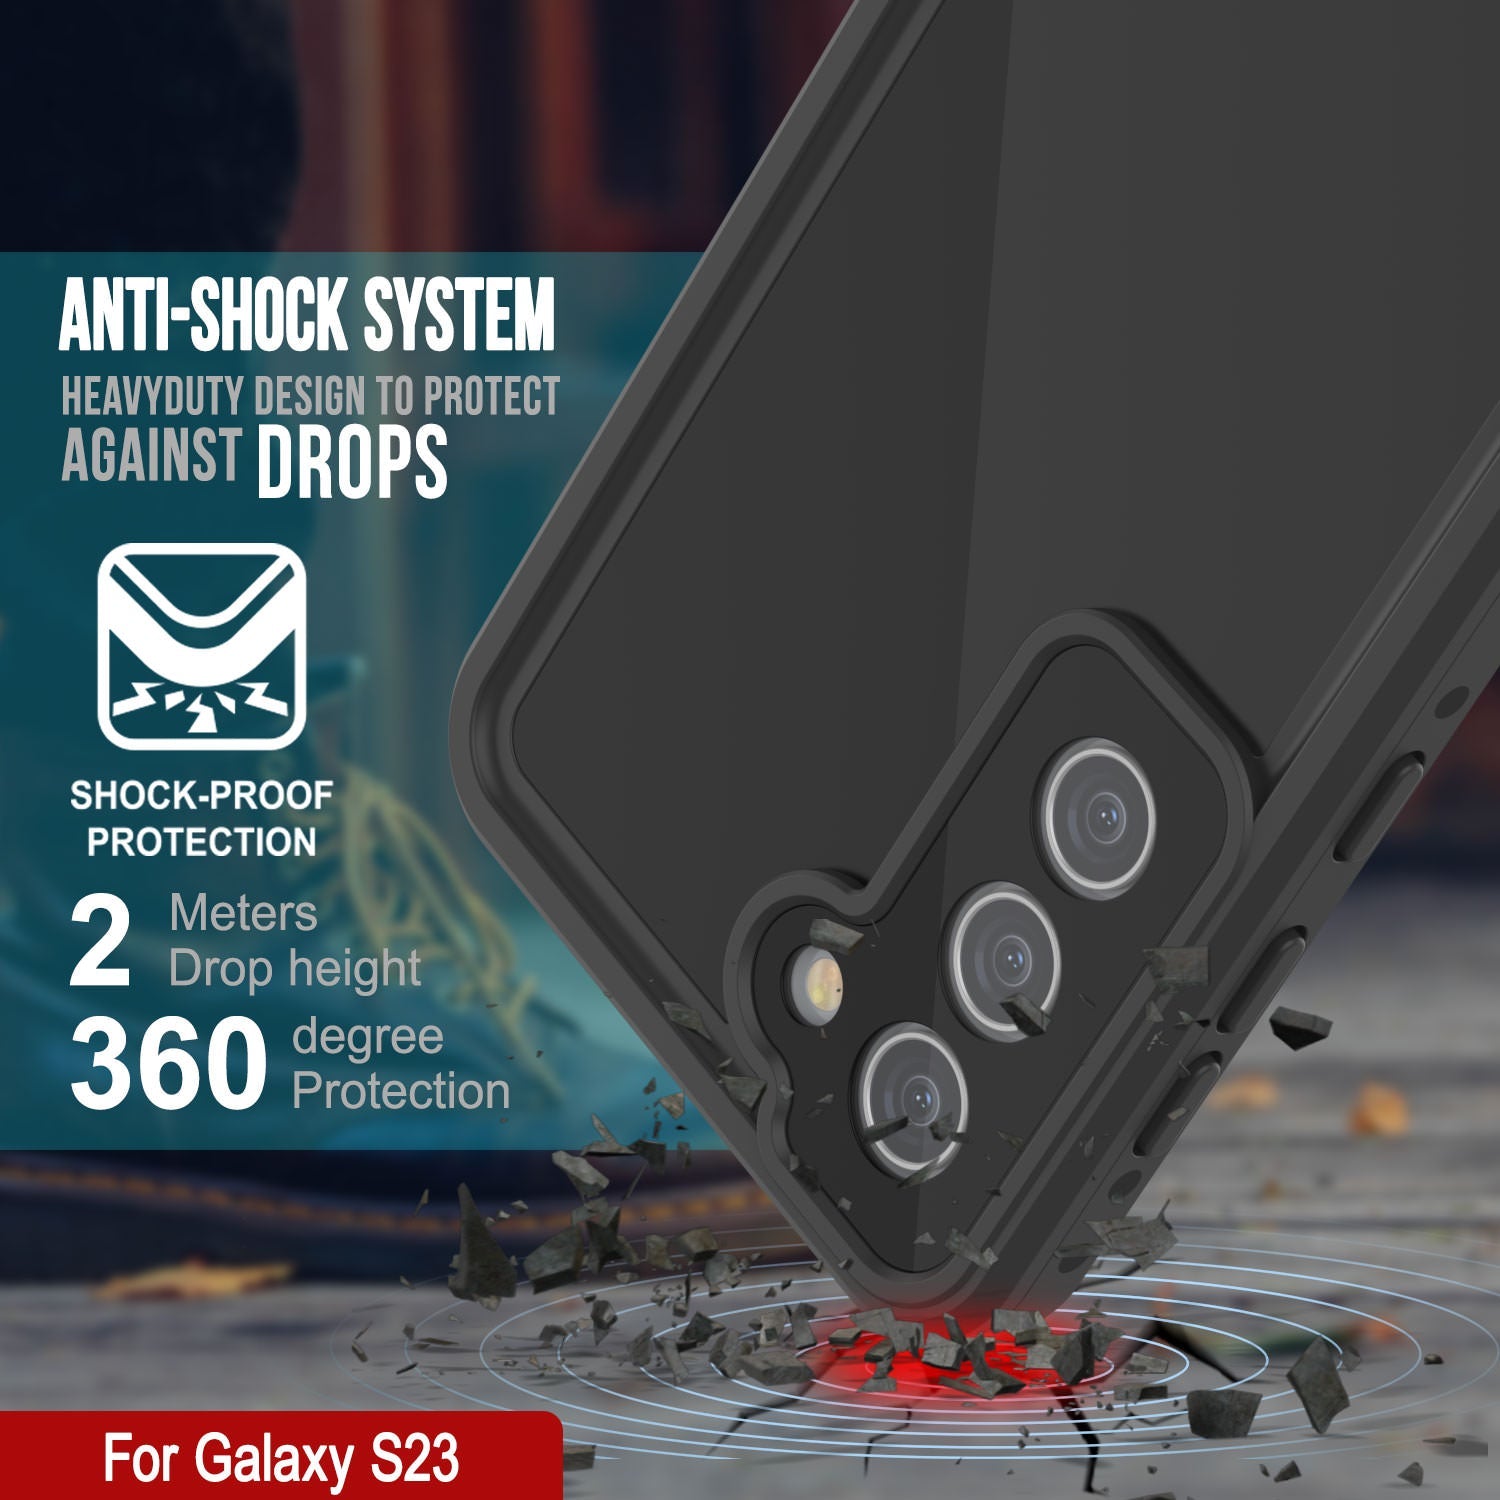 Galaxy S24 Waterproof Case PunkCase StudStar Black Thin 6.2ft Underwater IP68 Shock/Snow Proof